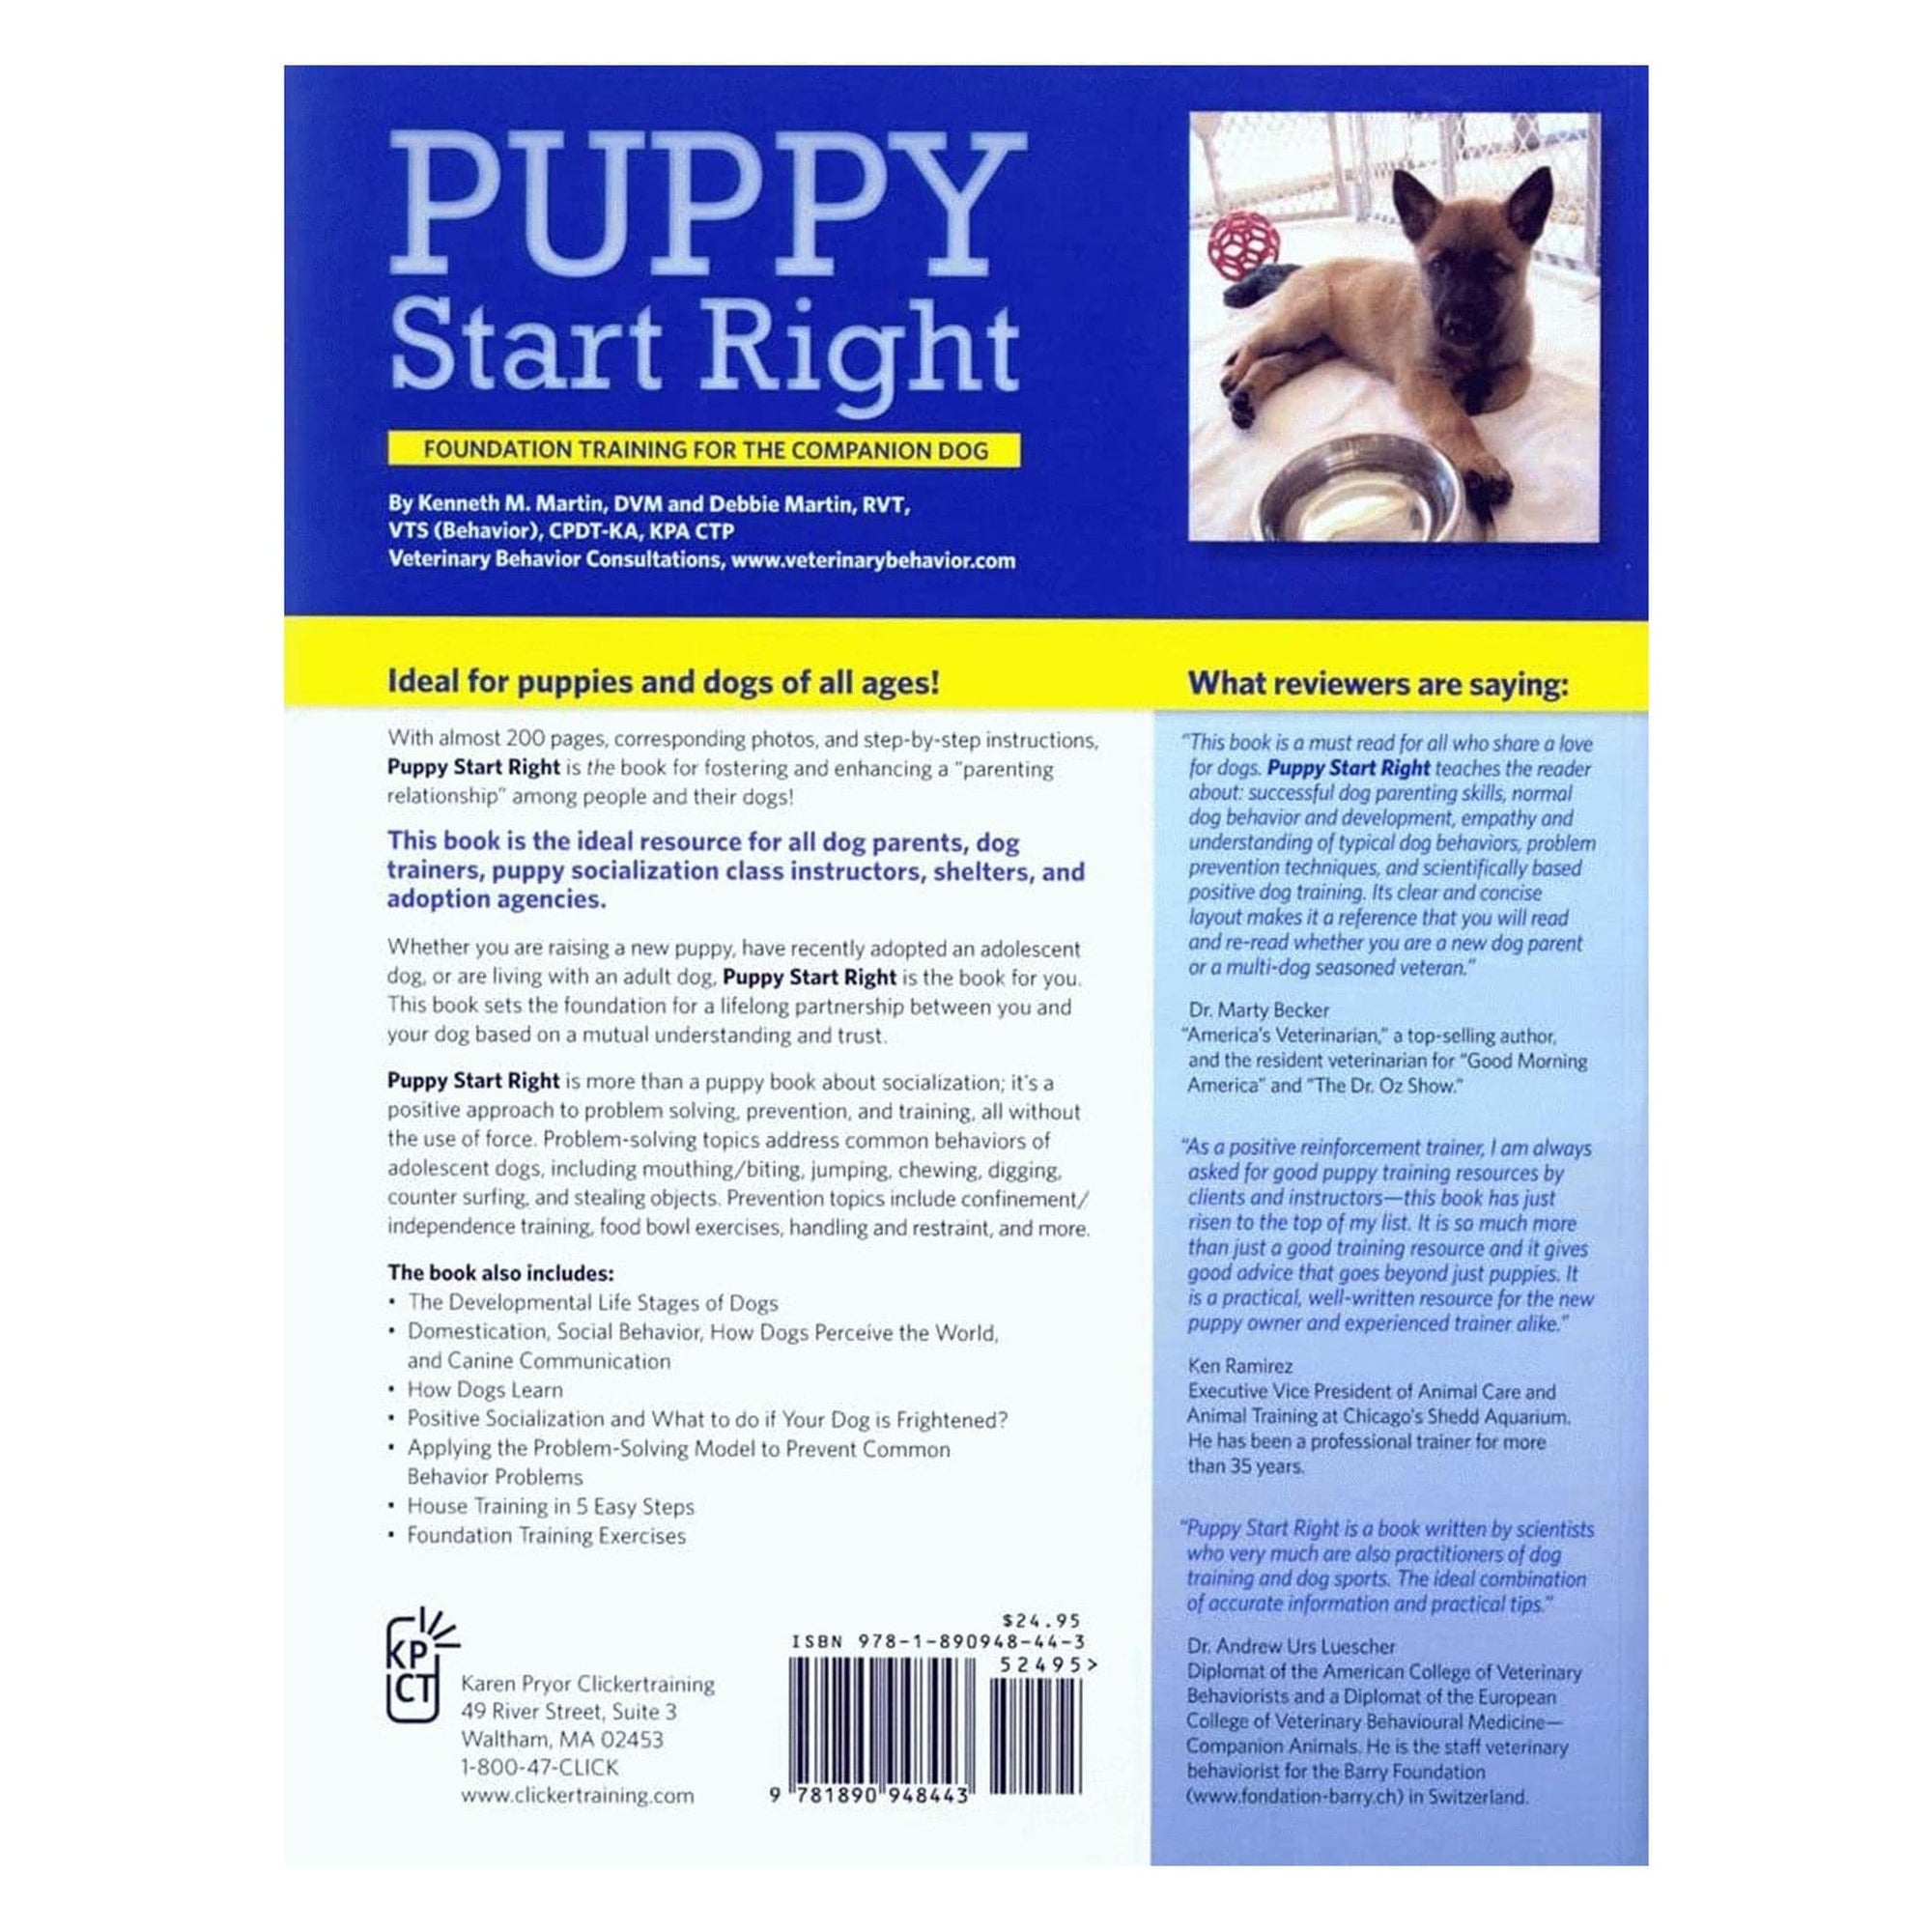 Dog　Puppy　for　Start　Pryor　Right:　Clicker　Foundation　Training　the　Companion　Karen　Training